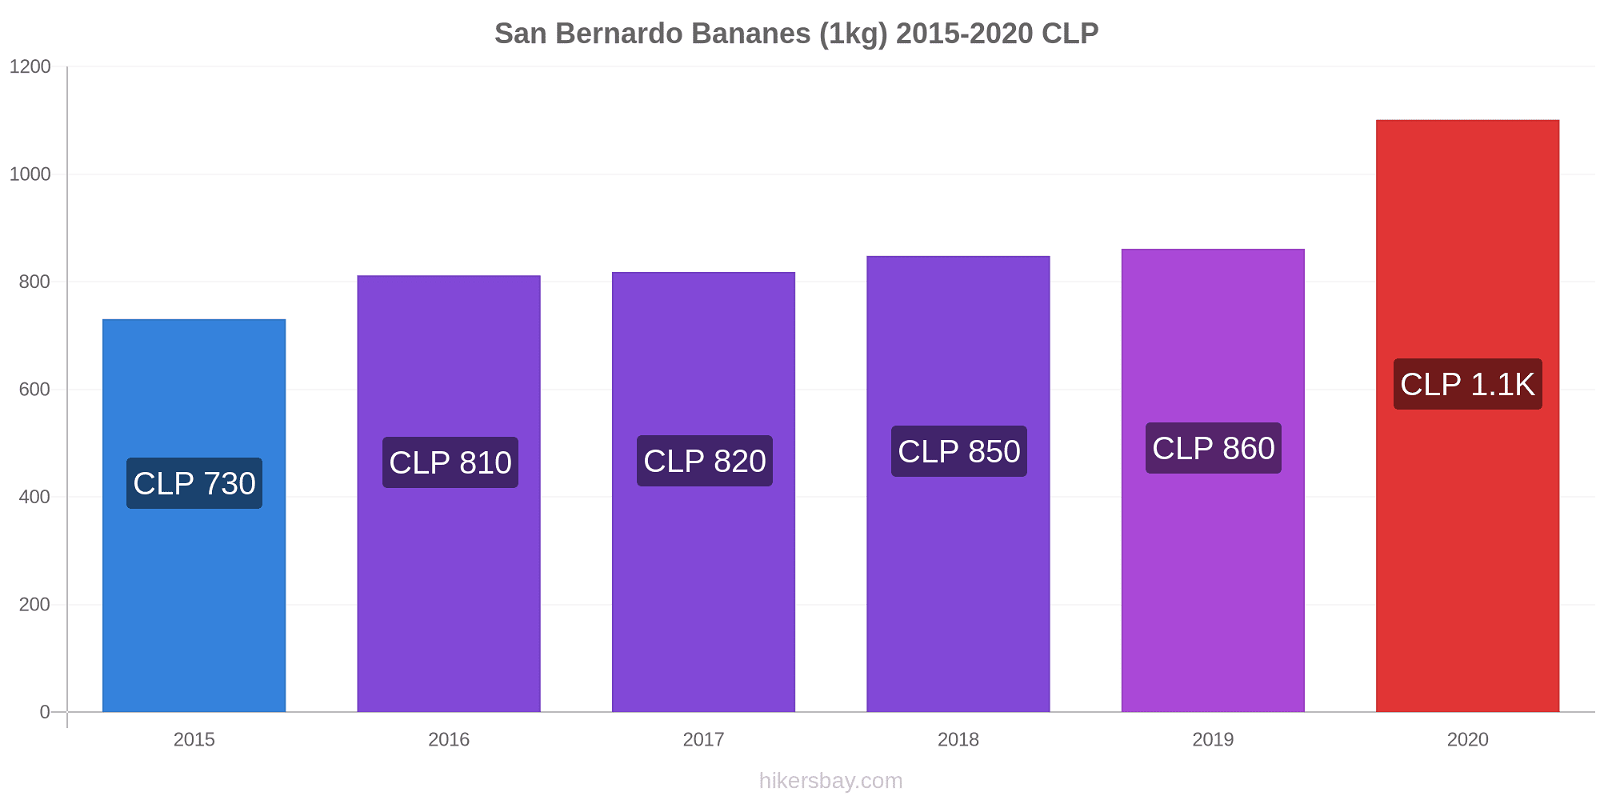 San Bernardo changements de prix Bananes (1kg) hikersbay.com